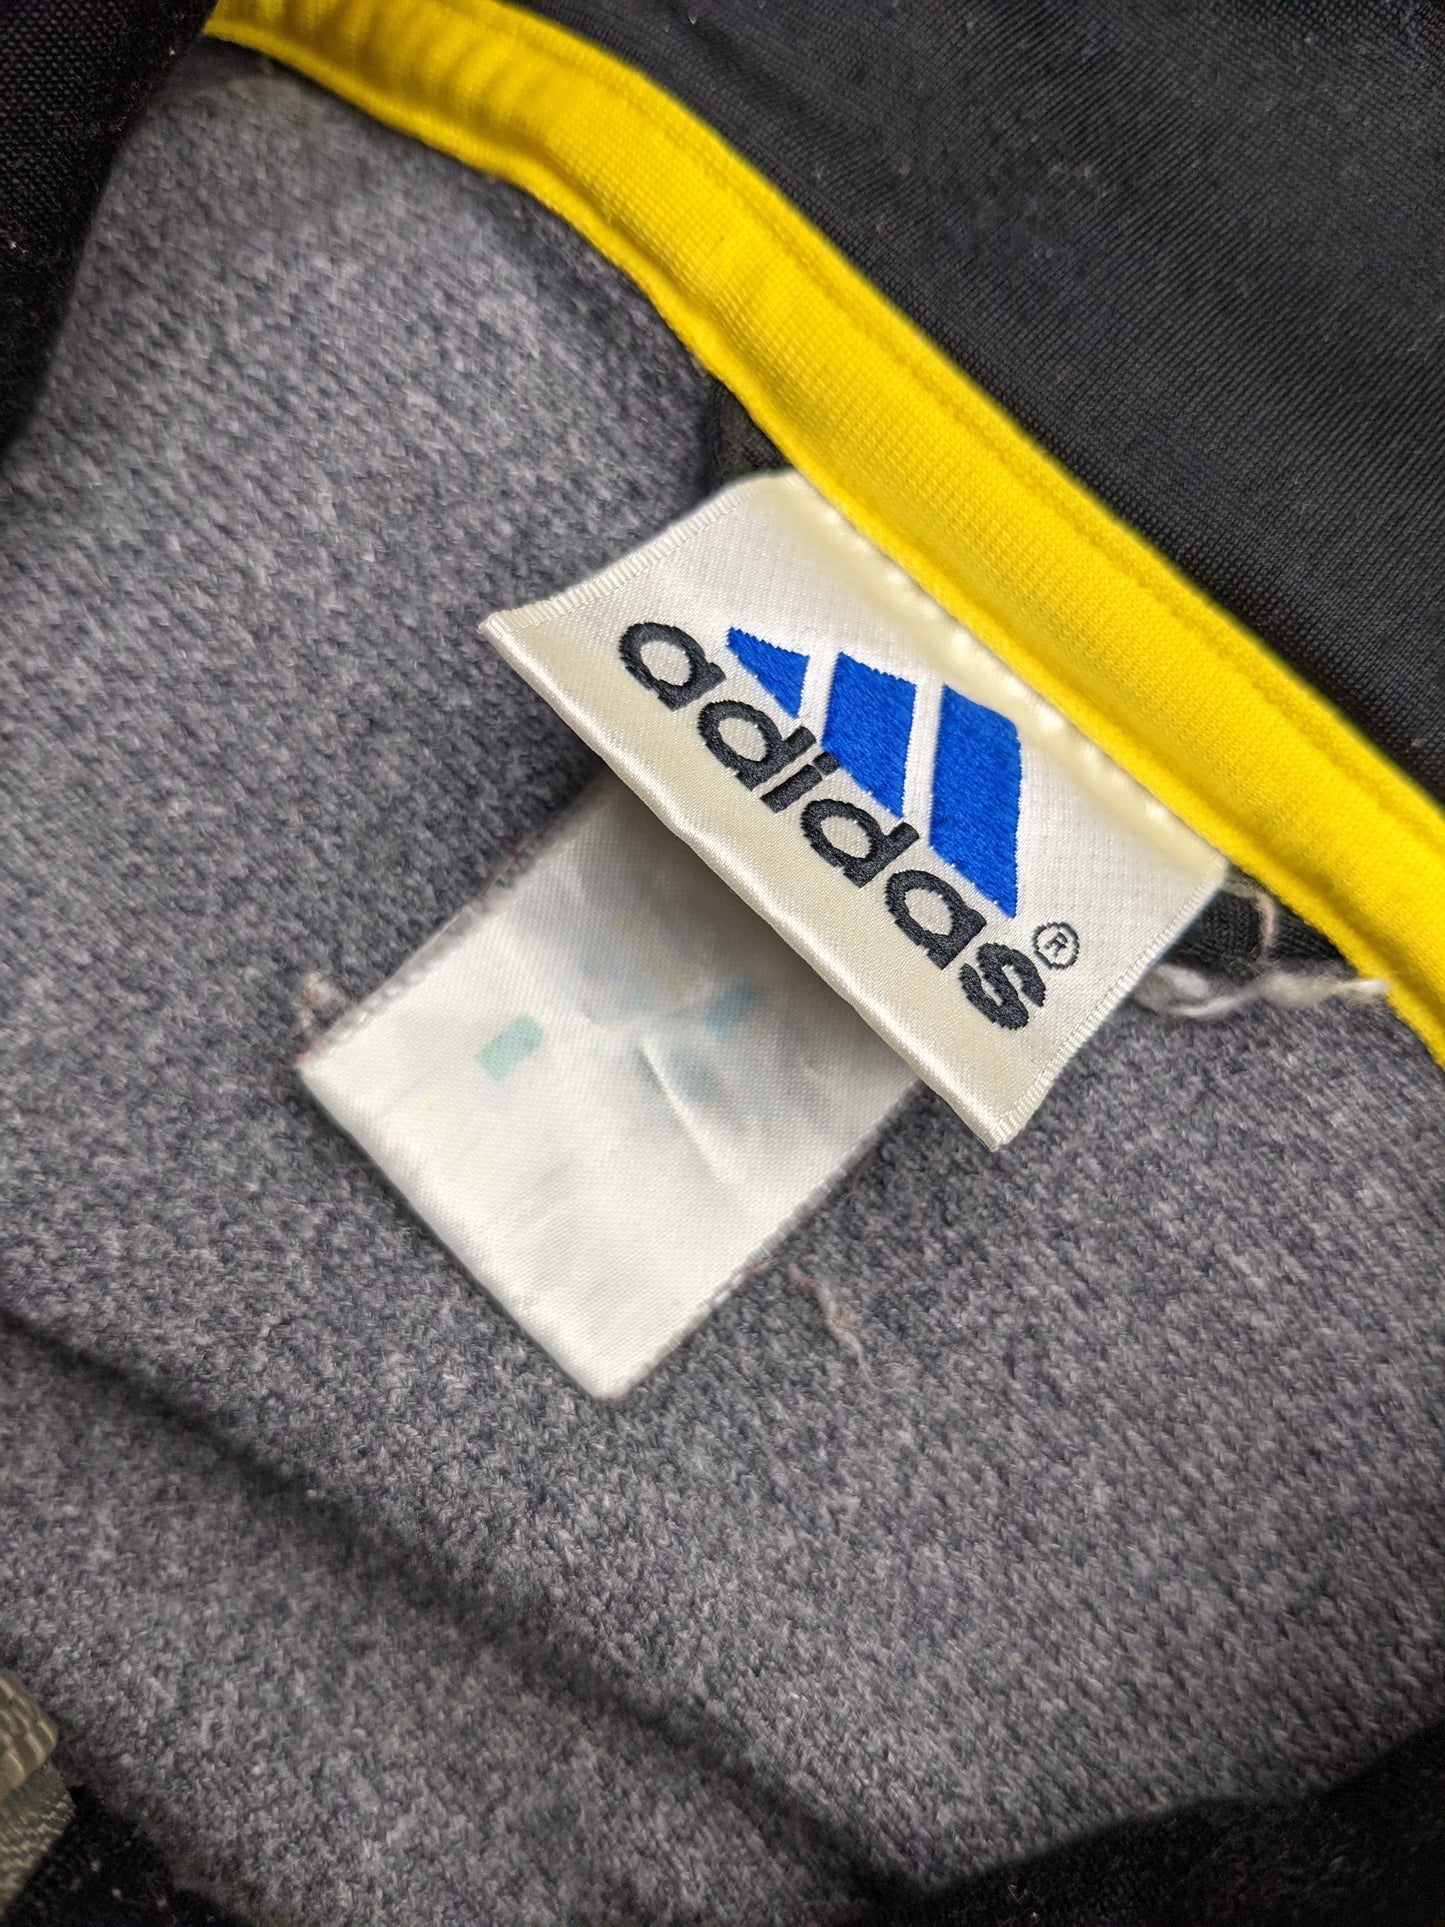 00s Adidas Track Jacket grey yellow M/L